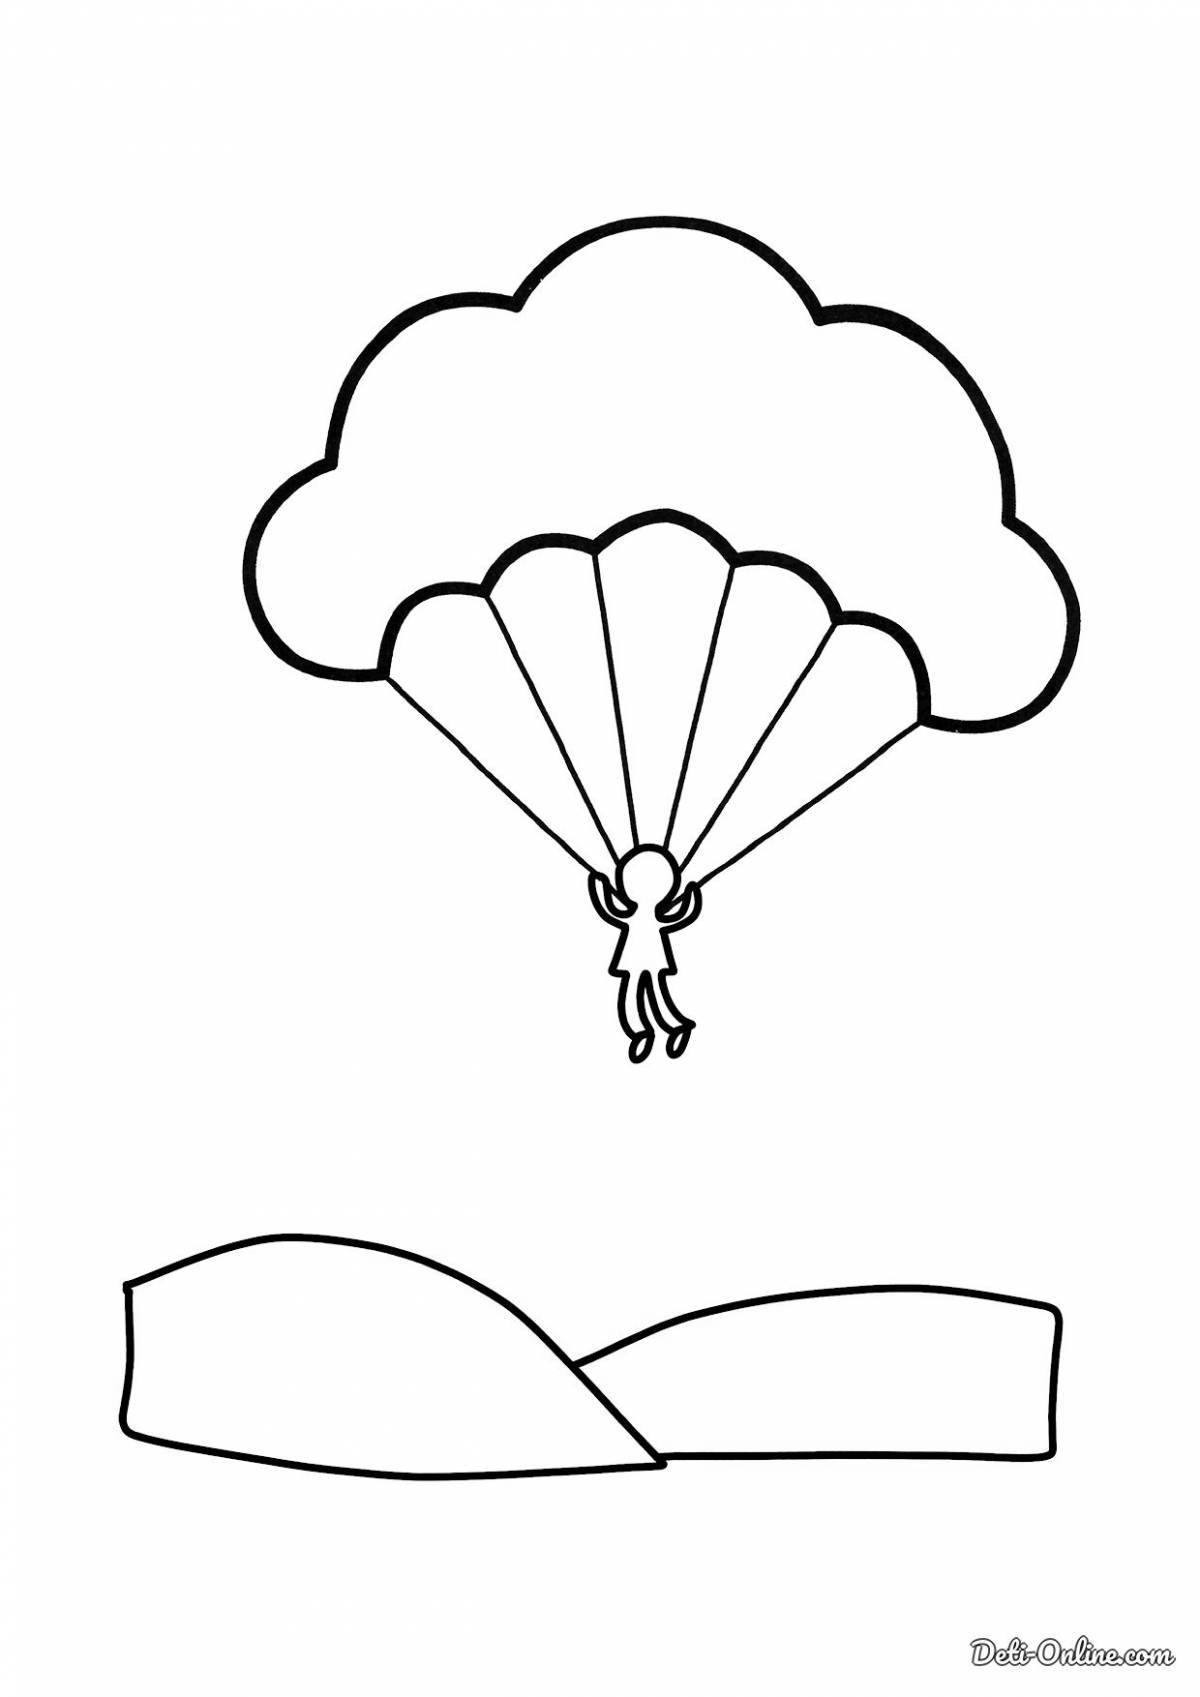 Inviting baby parachute coloring book